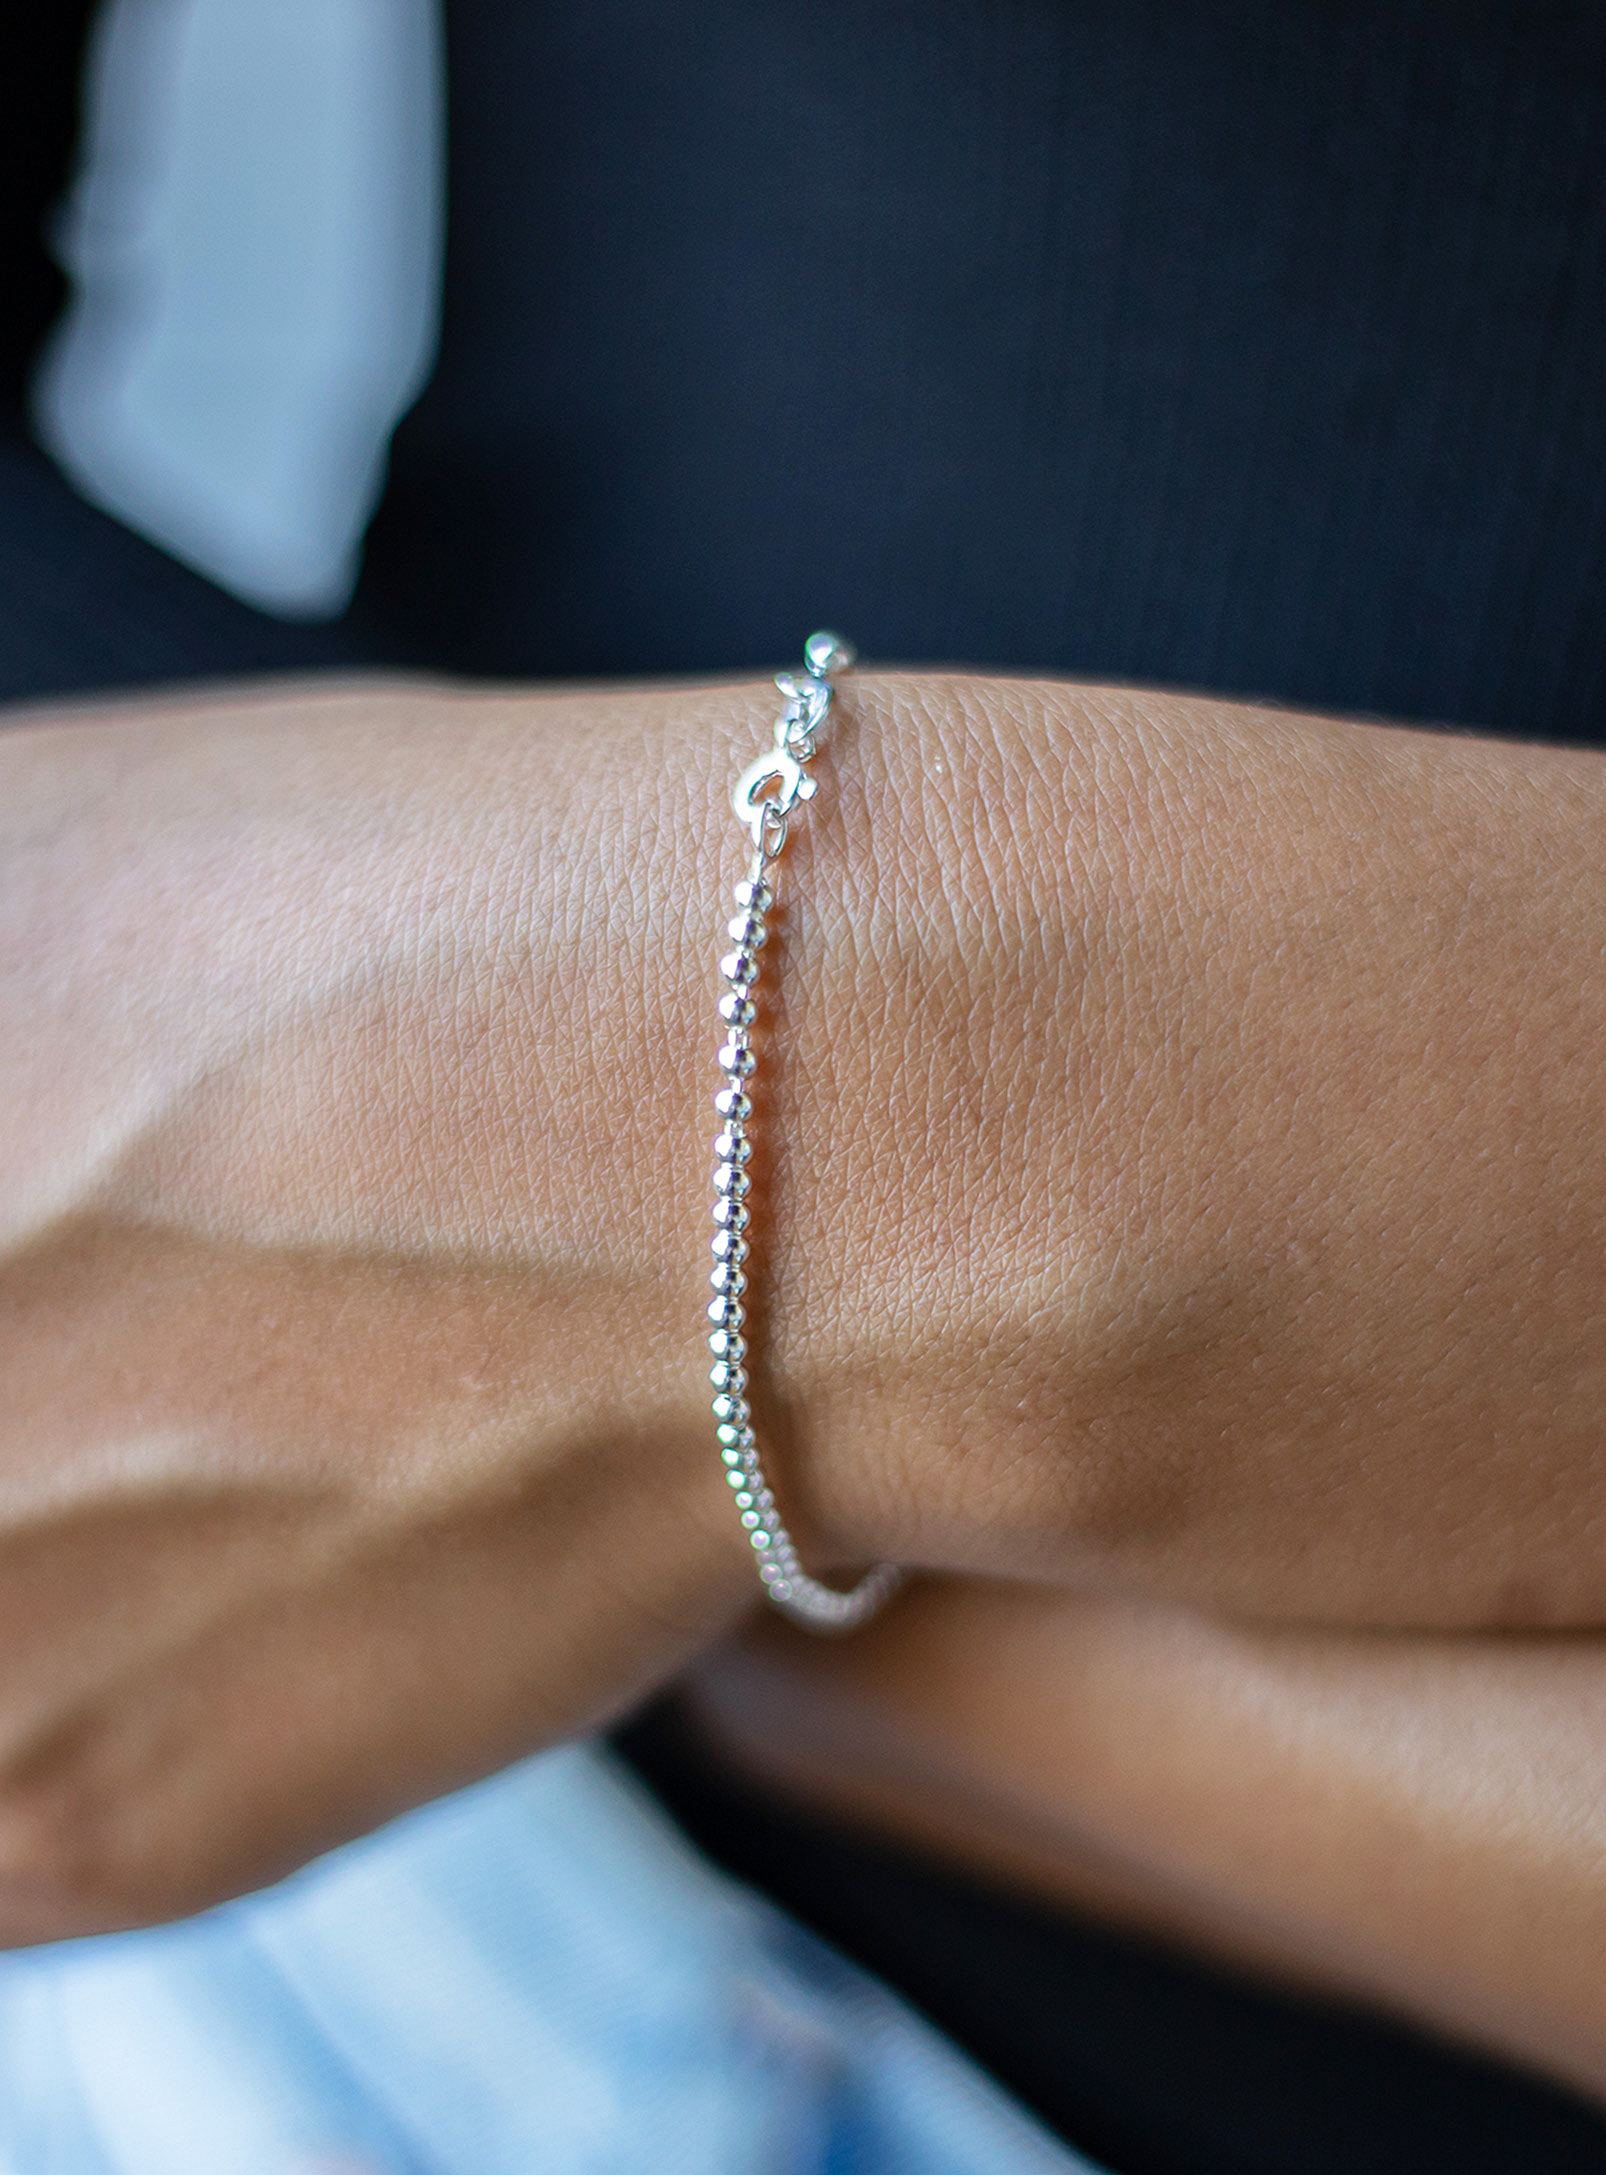 Camillette - Le bracelet petites billes en argent sterling